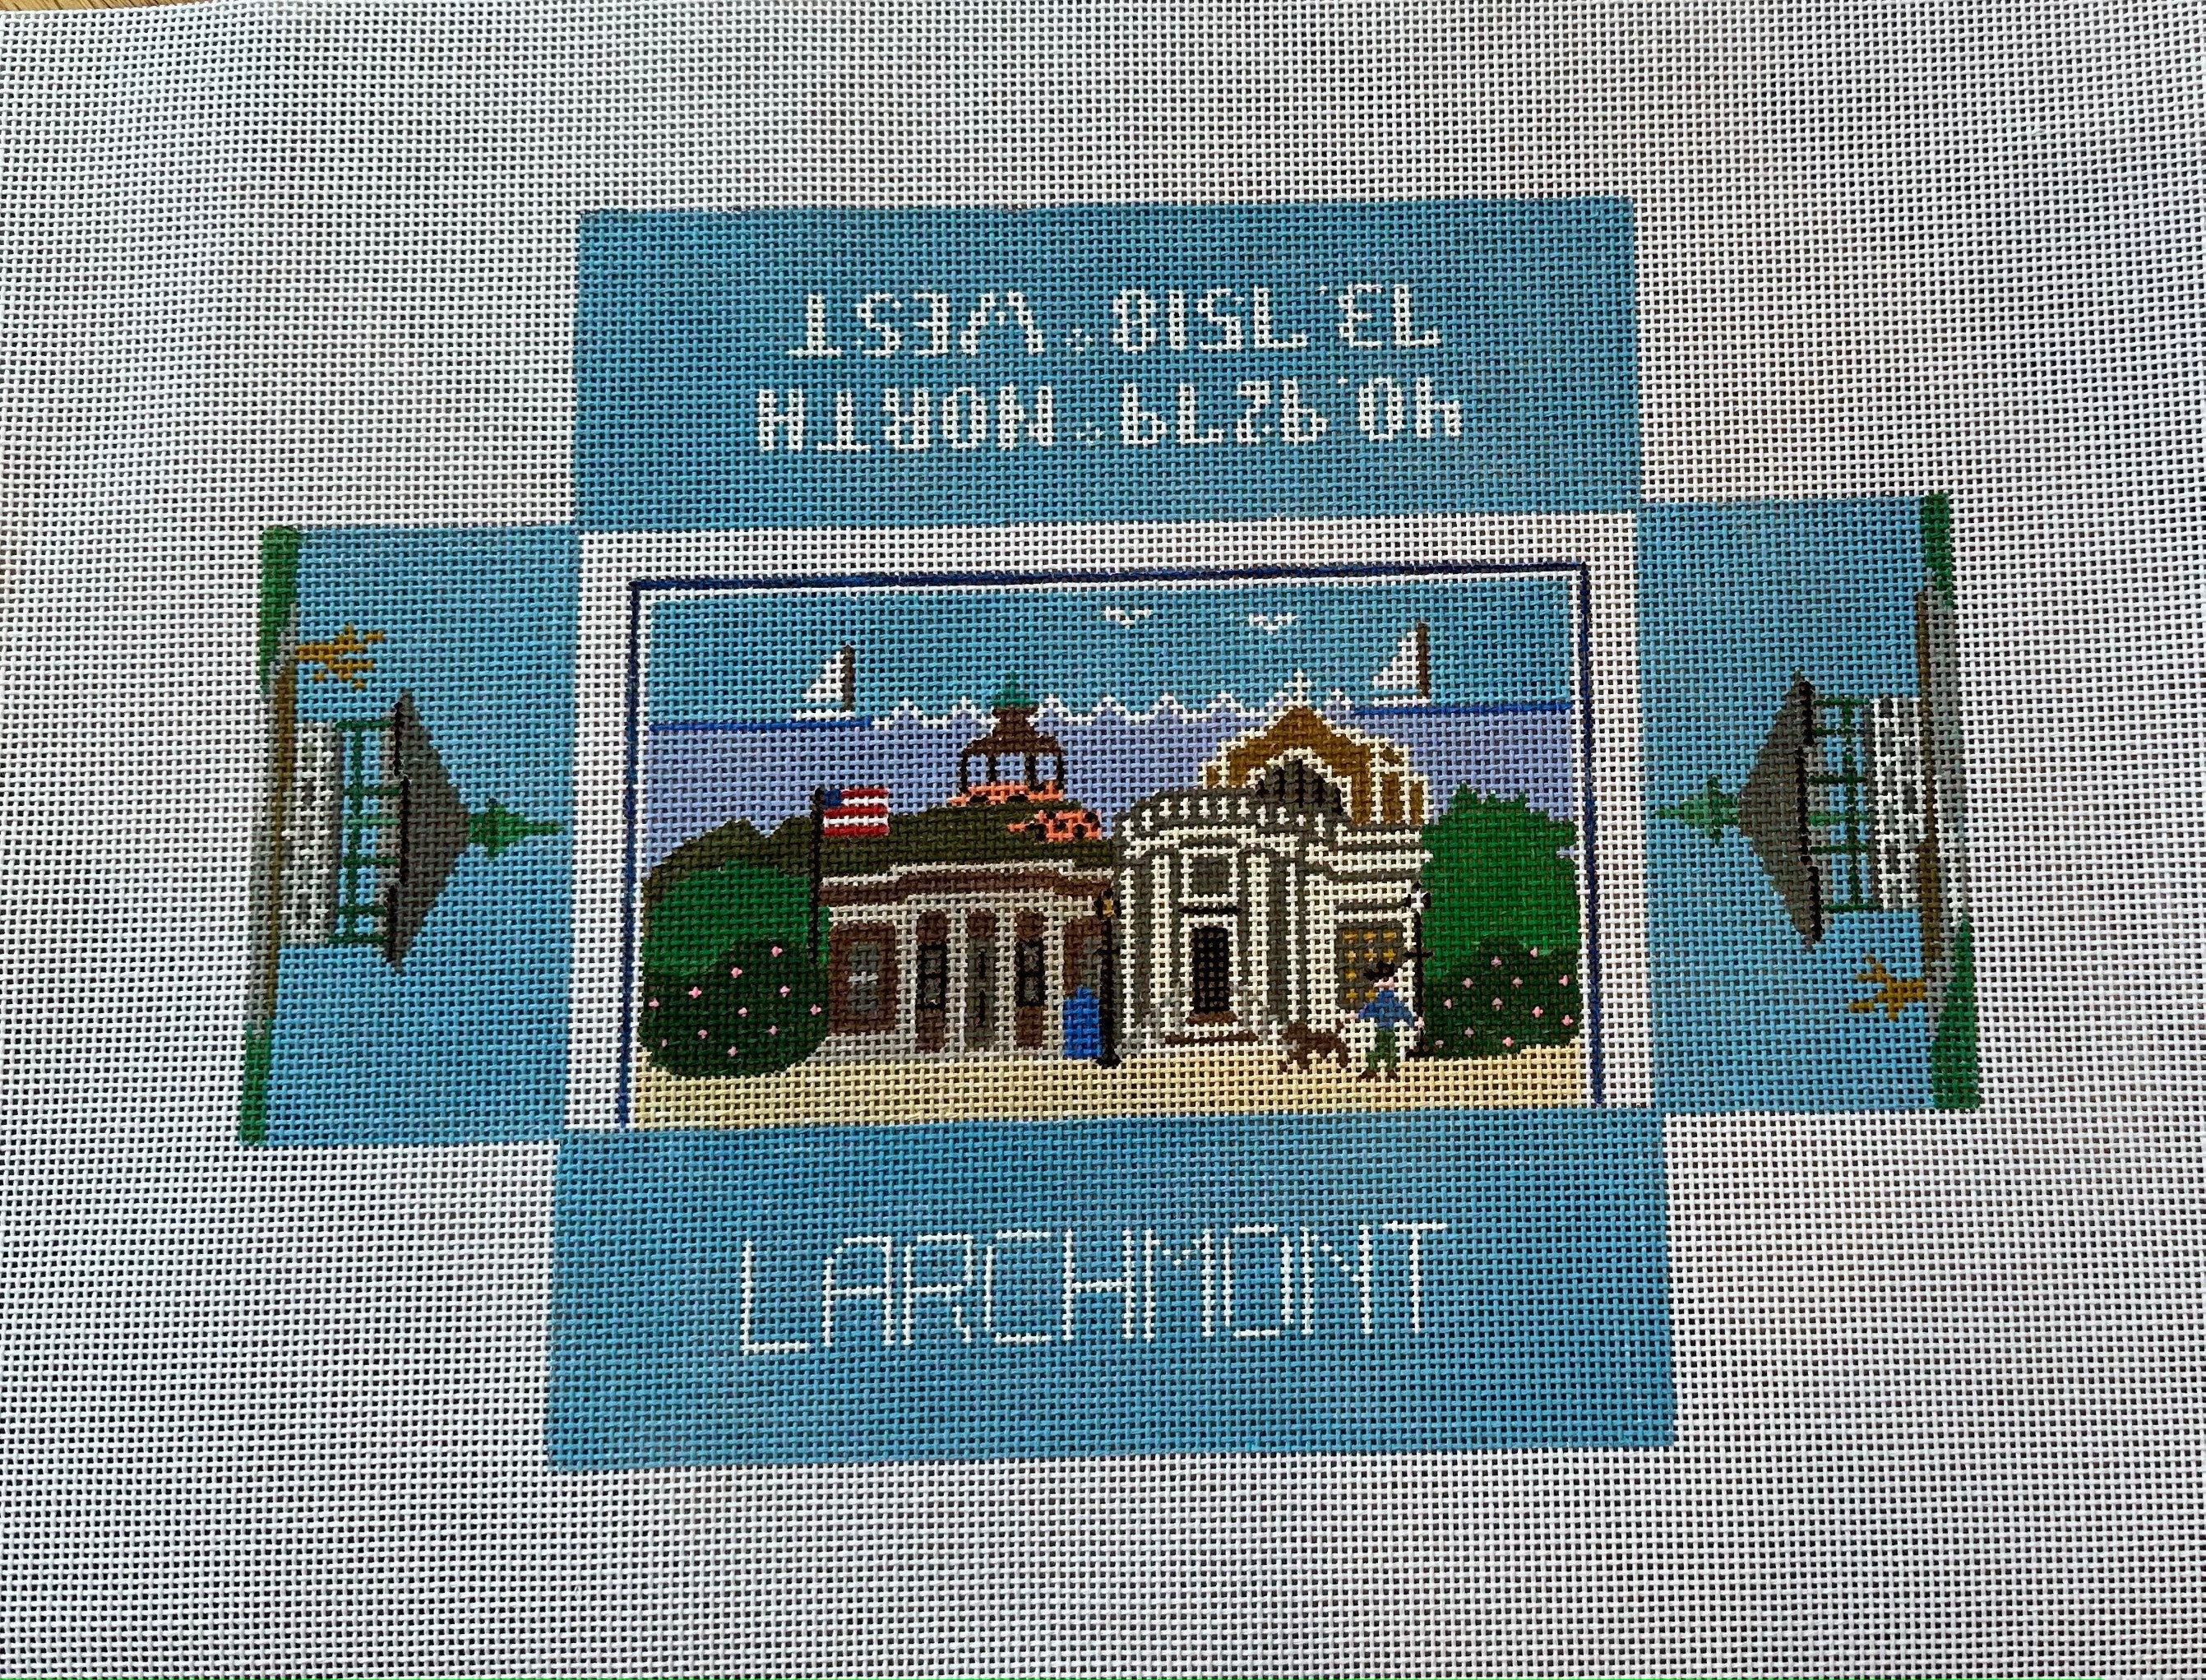 Stitch By Stitch Larchmont Brick Cover